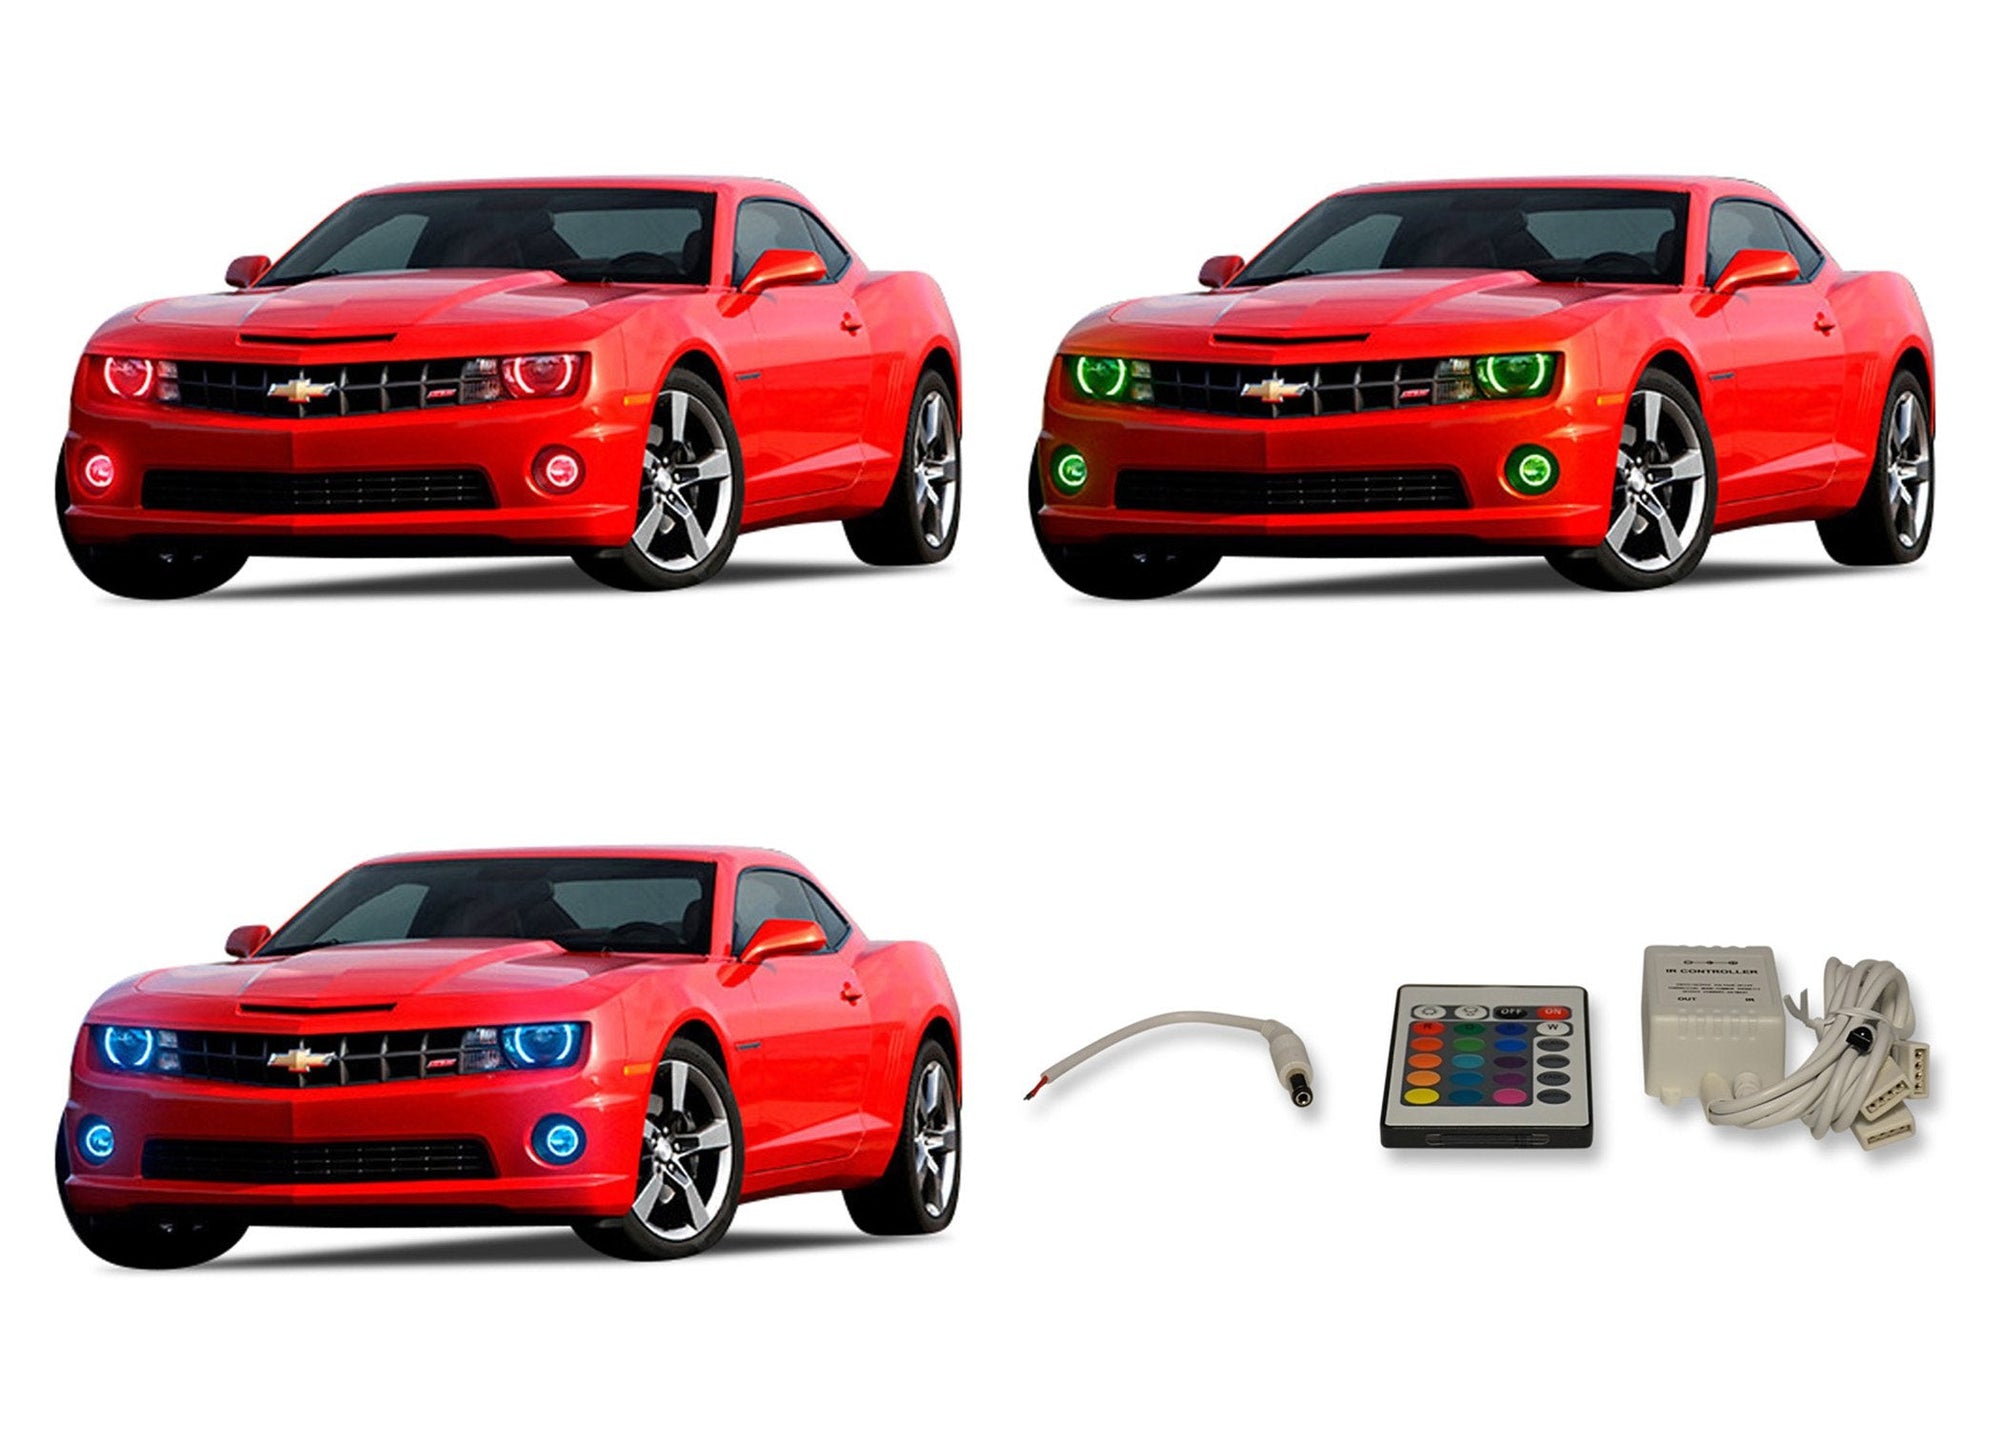 Chevrolet-Camaro-2010, 2011, 2012, 2013-LED-Halo-Headlights and Fog Lights-RGB-IR Remote-CY-CANR1013-V3HFIR